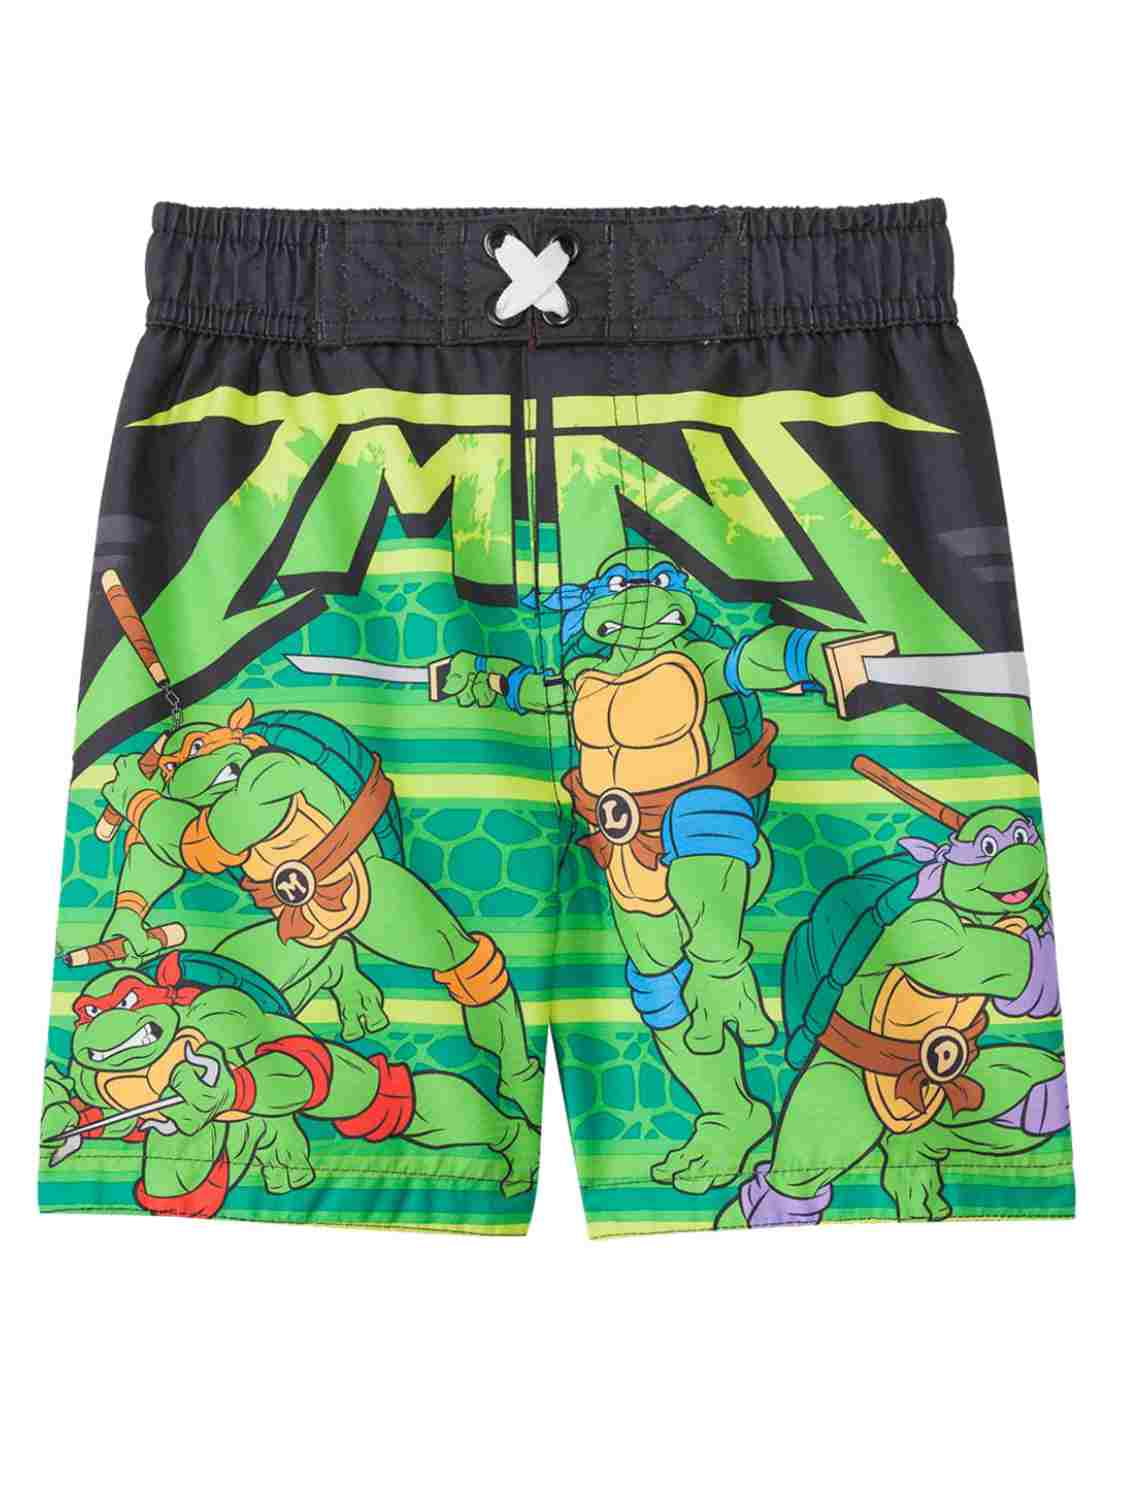 Teenage Mutant Ninja Turtles Toddler Boys Character Swim Short Size 2T 3T 4T 